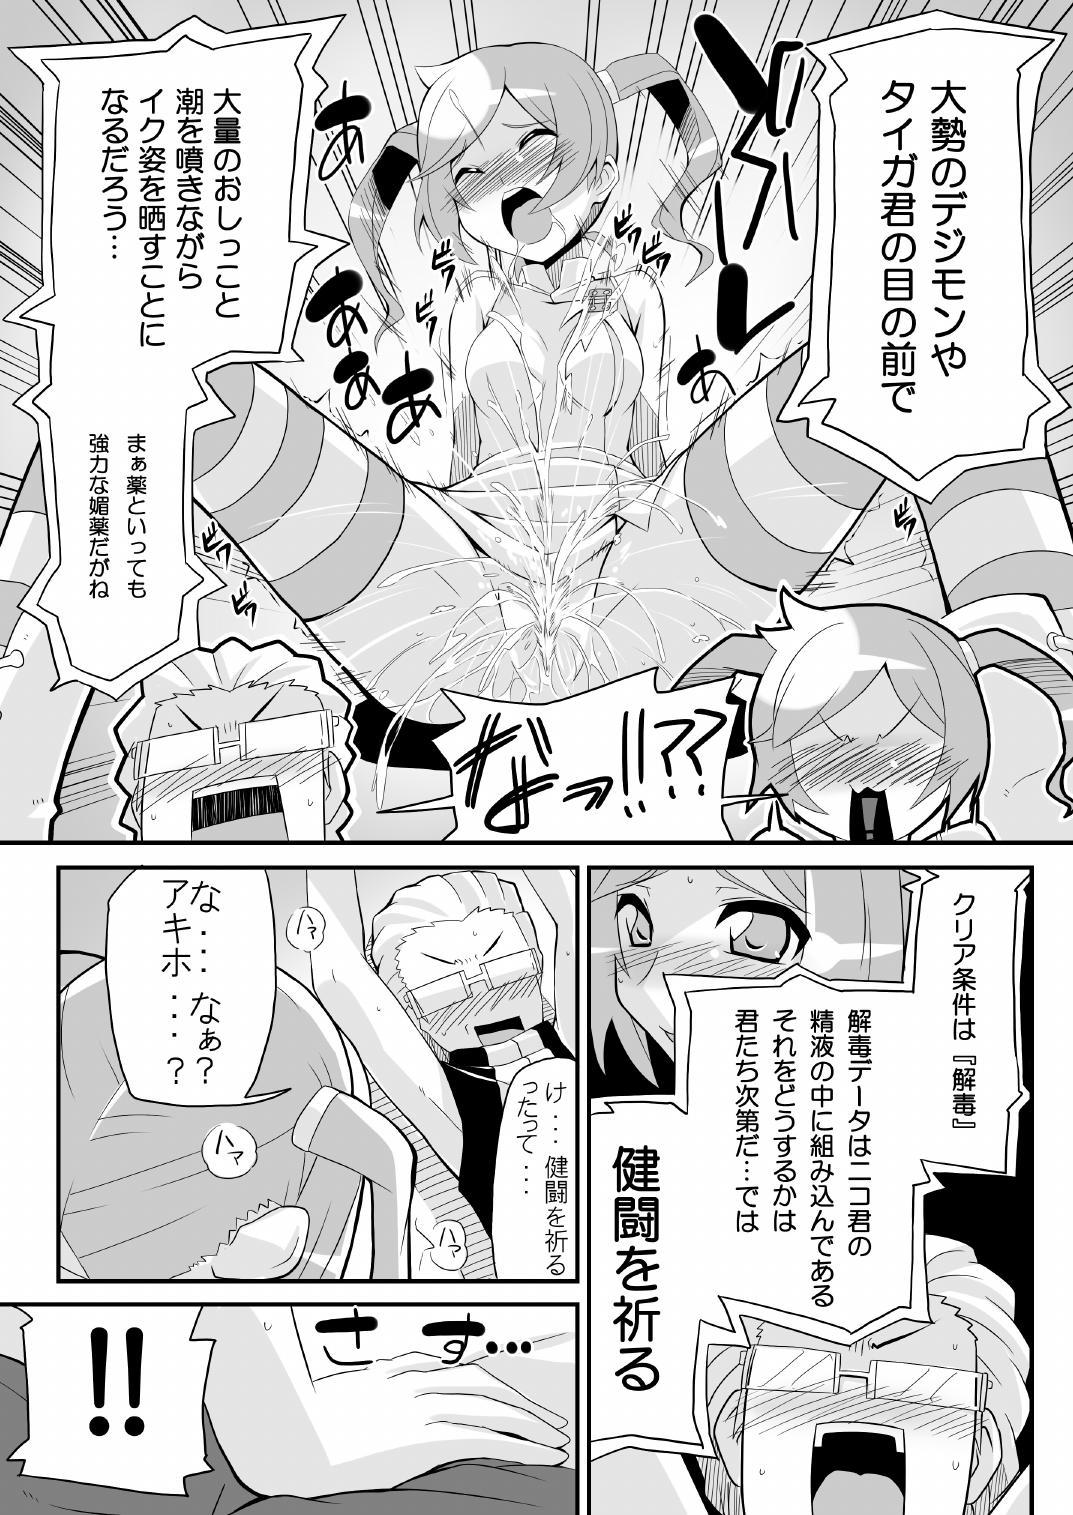 Teen Blowjob Re:Akiho/Rinatize Ero - Digimon Sapphic Erotica - Page 5